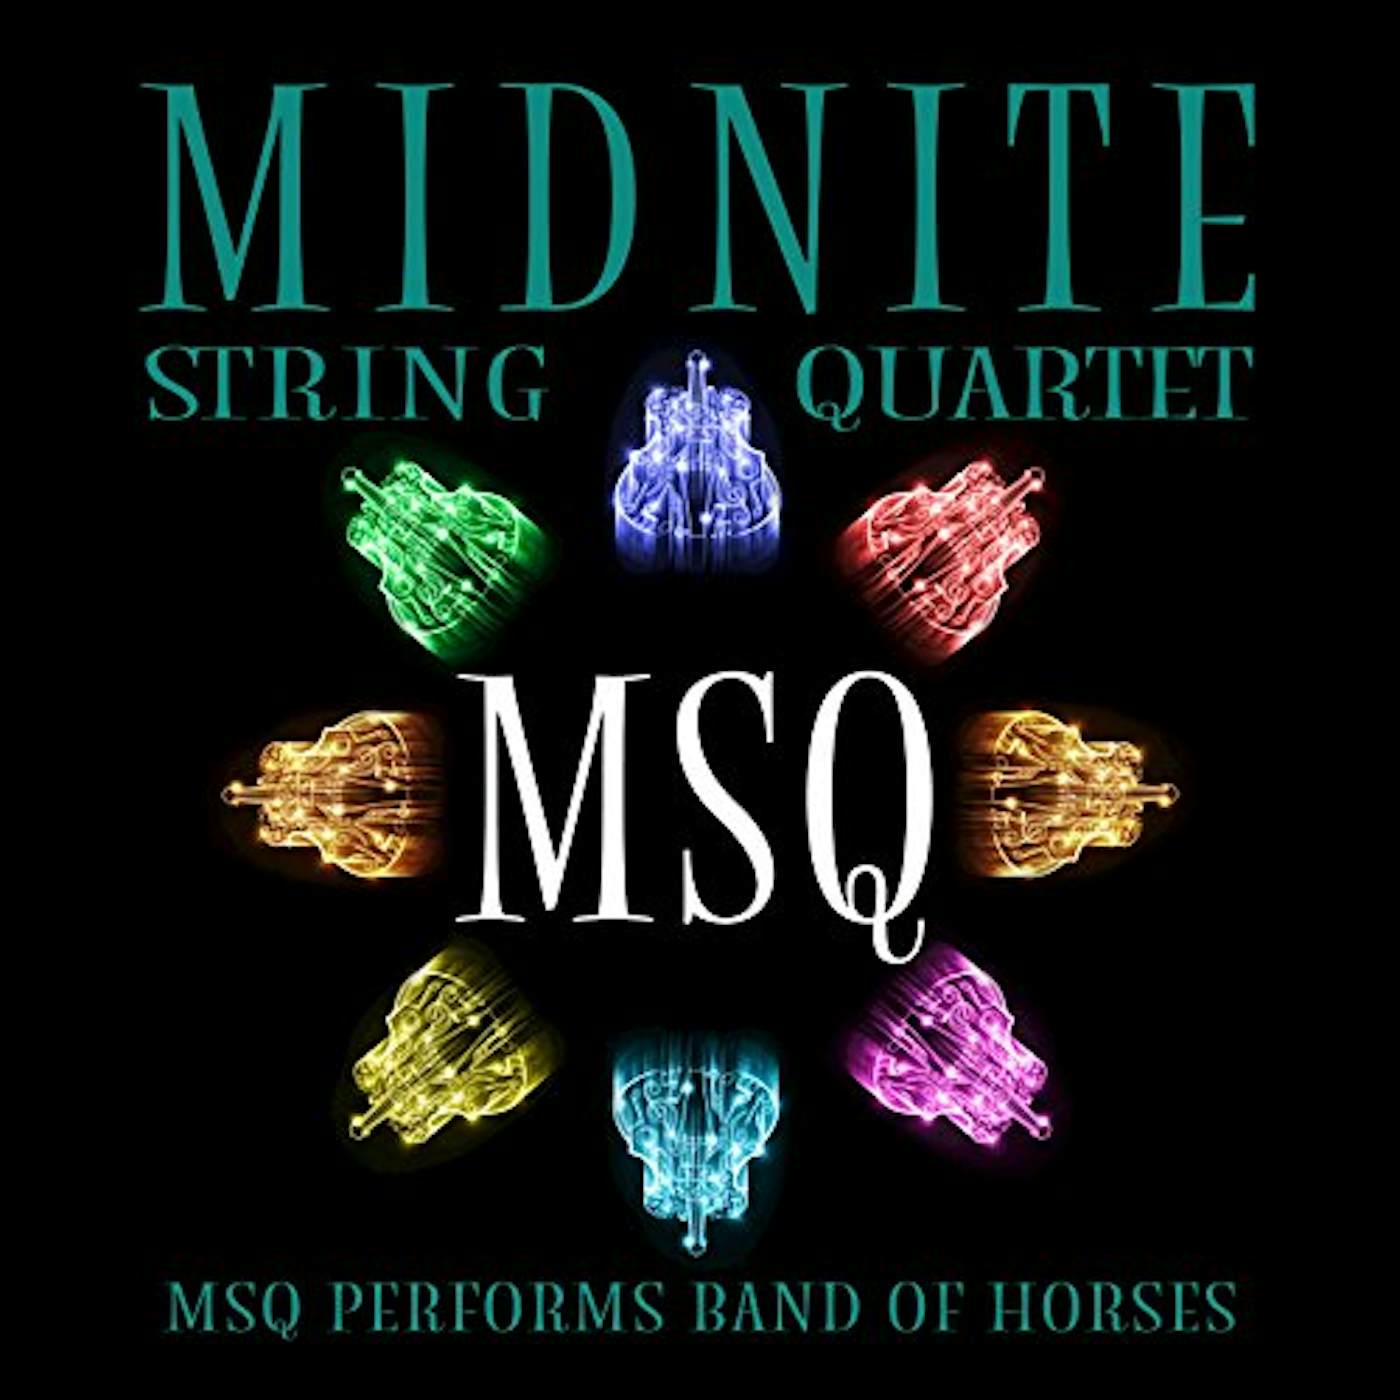 Midnite String Quartet MSQ PERFORMS BAND OF HORSES (MOD) CD